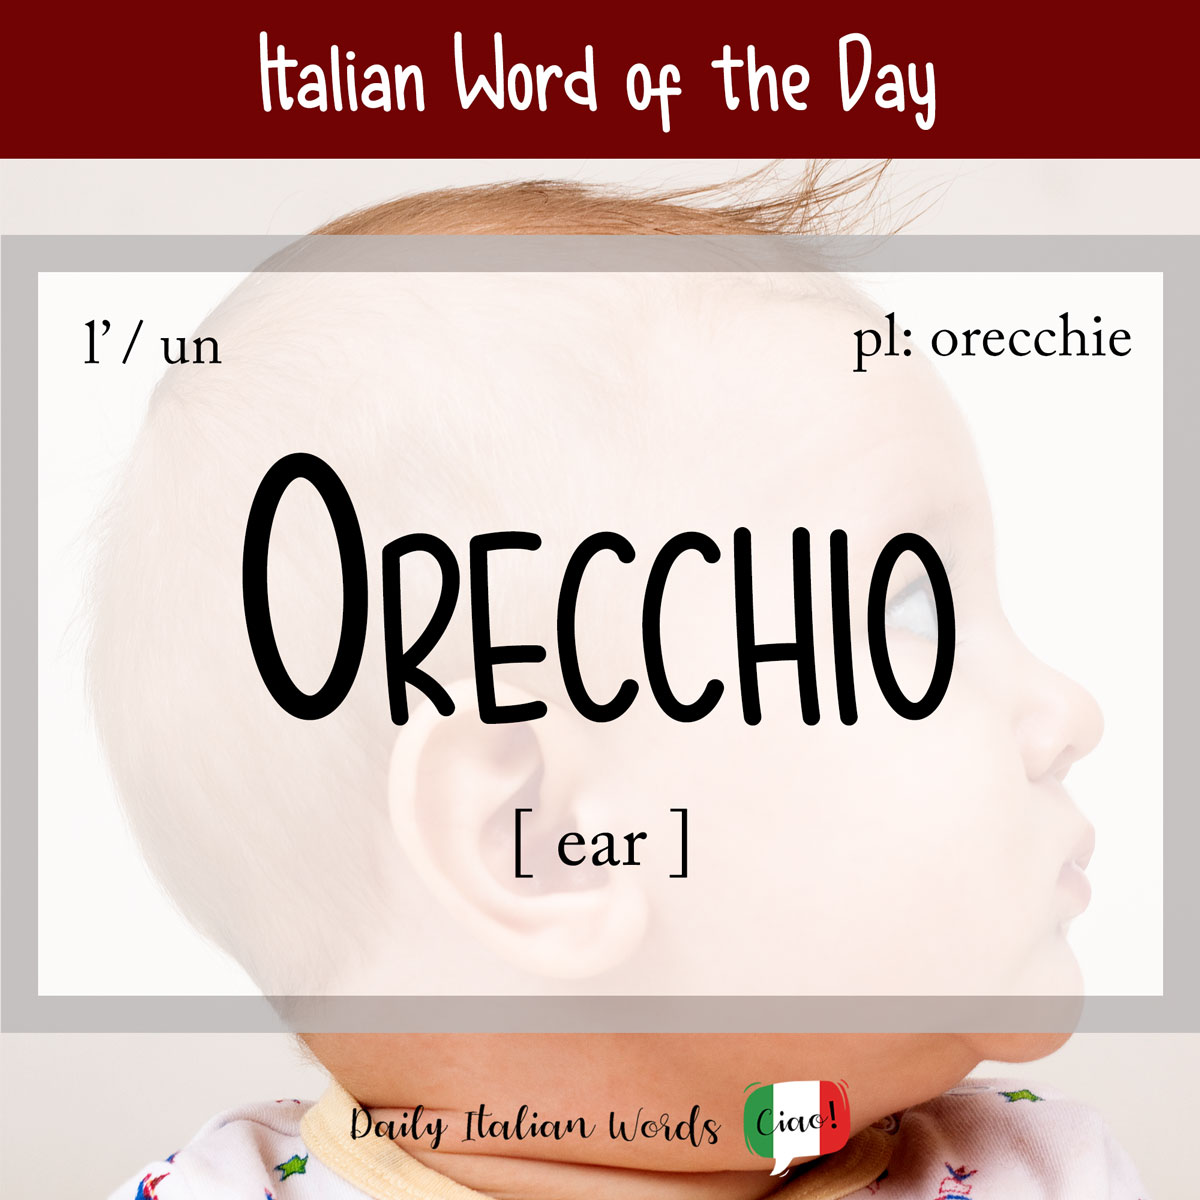 Italian Phrase of the Day: Orecchio (ear)